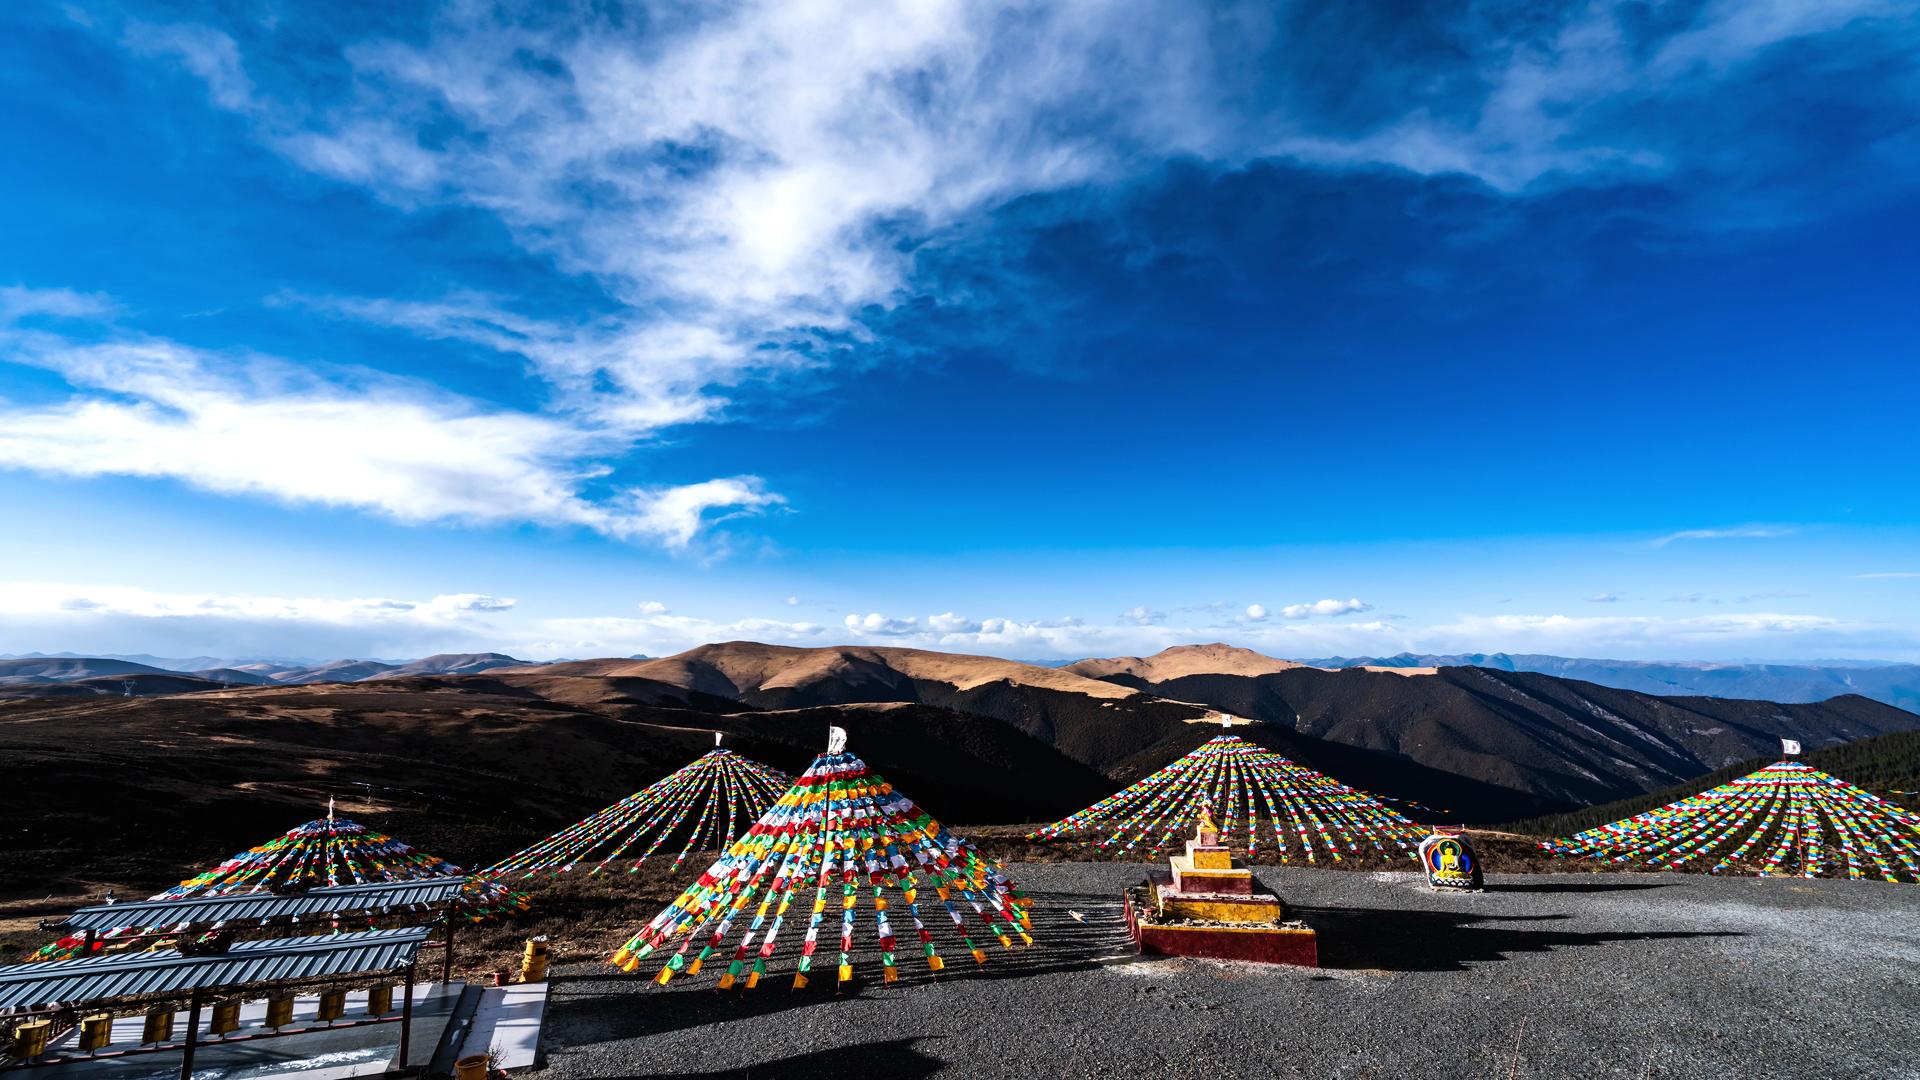 8K西藏尼玛贡神山观景台延时视频的预览图